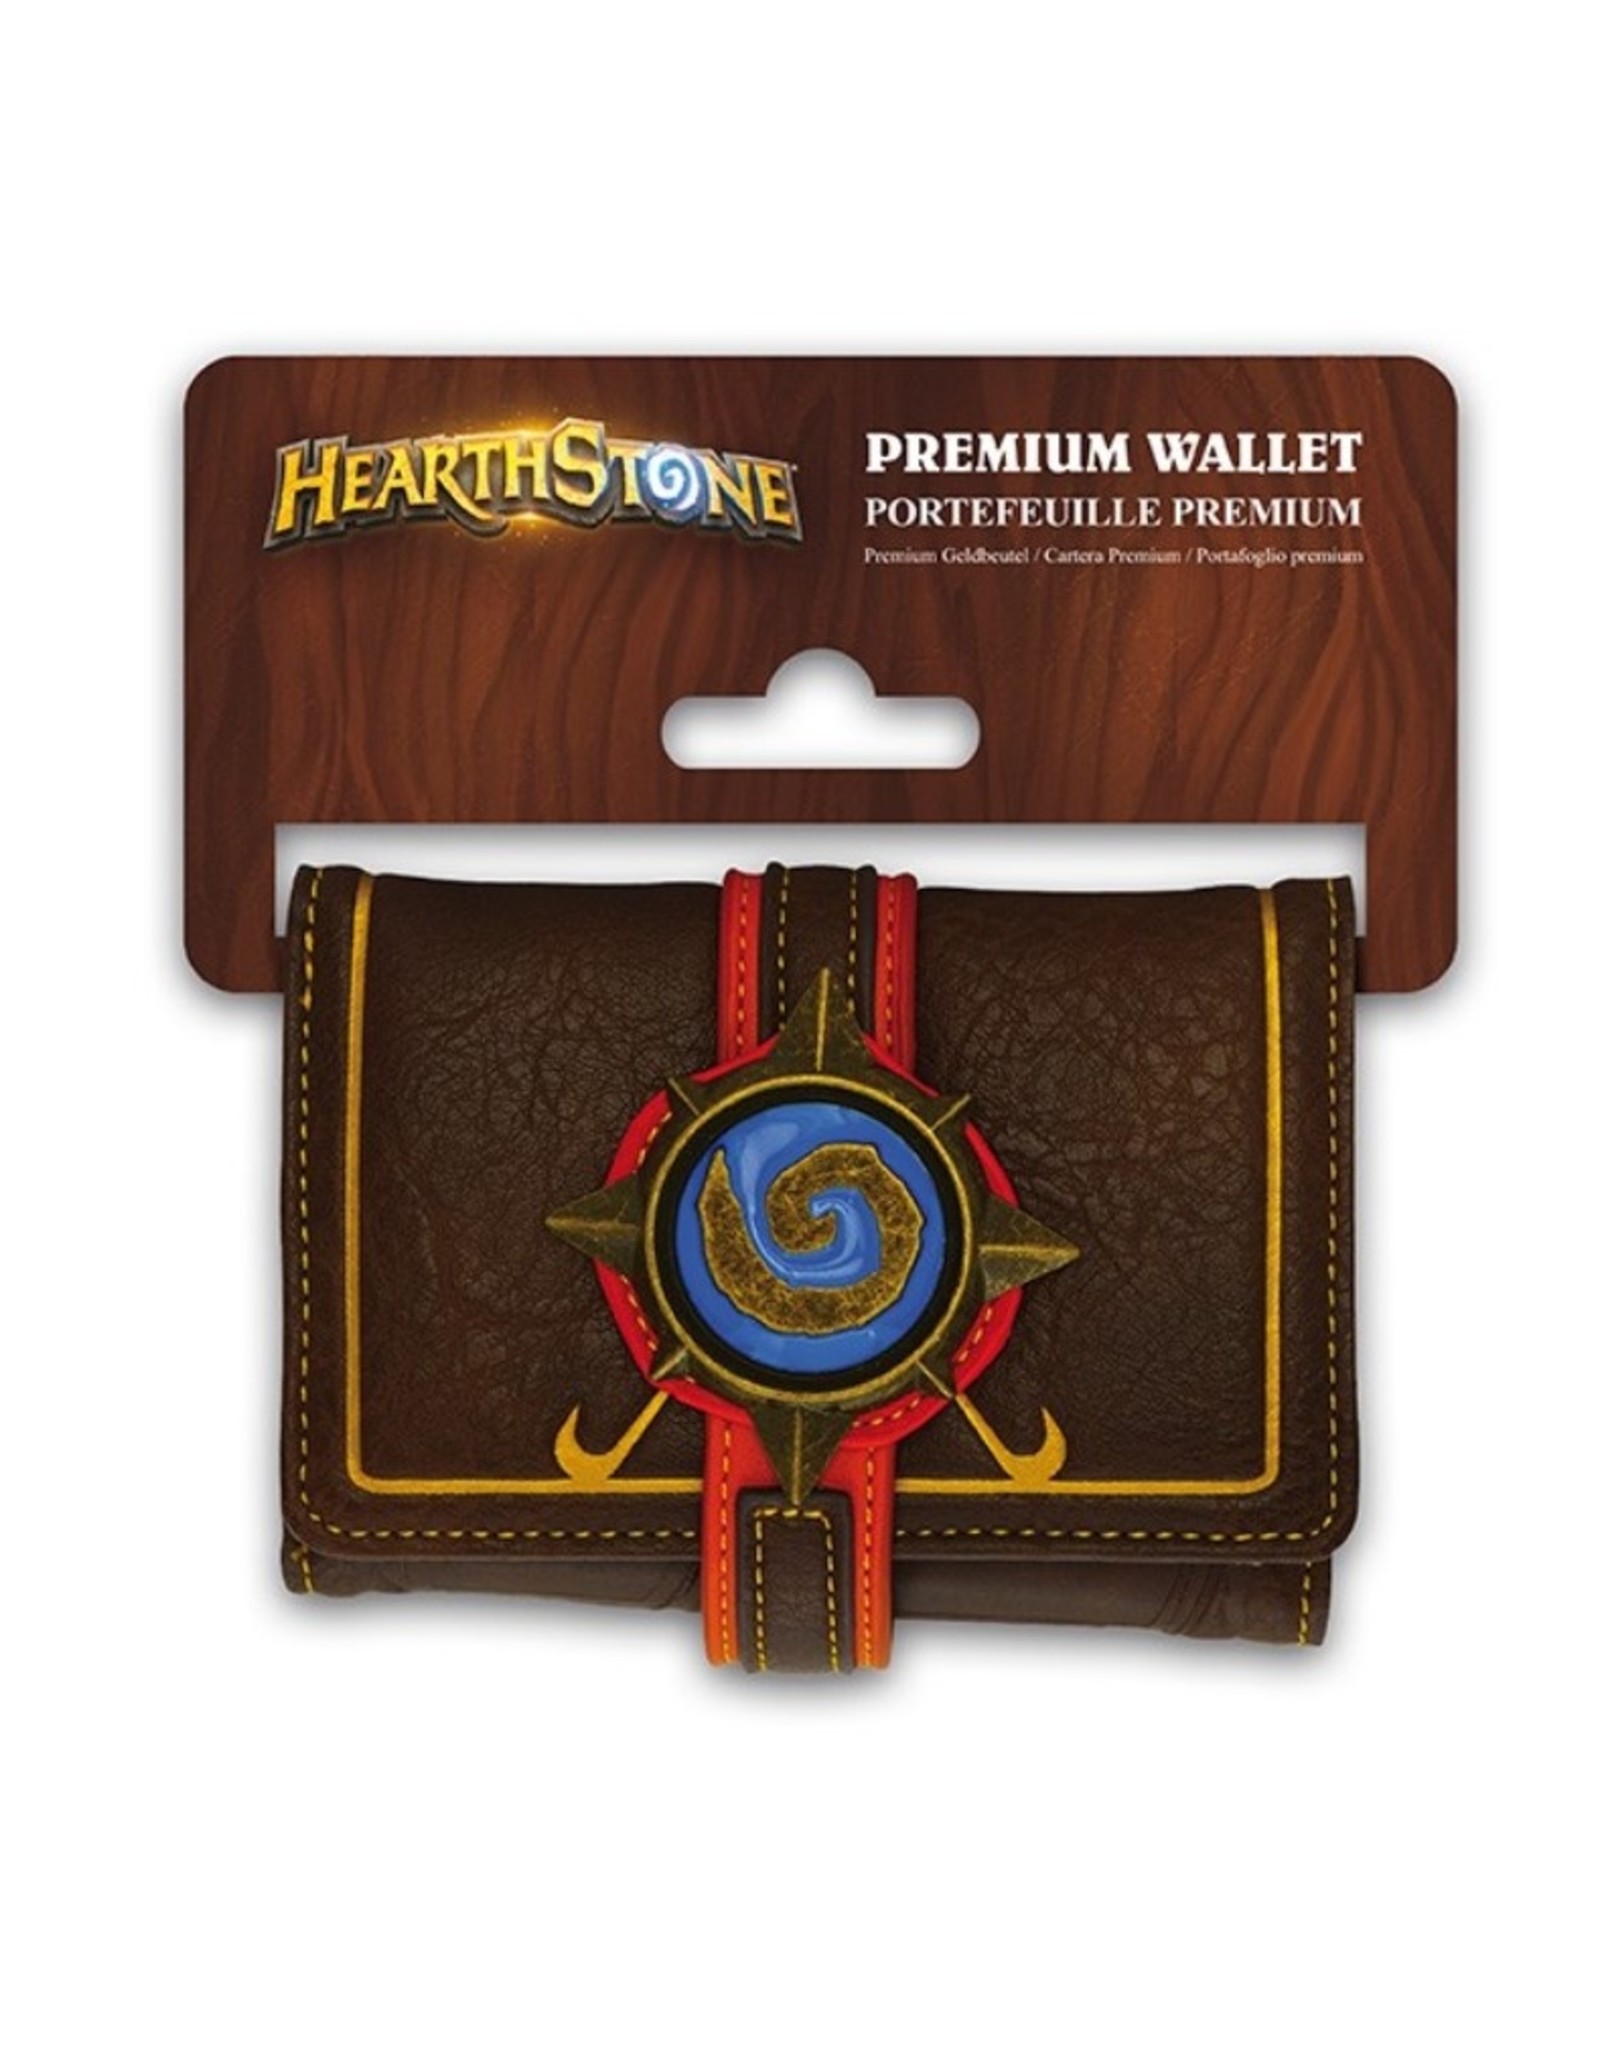 heartstone Merchandise - HEARTHSTONE Premium Wallet "Booster"